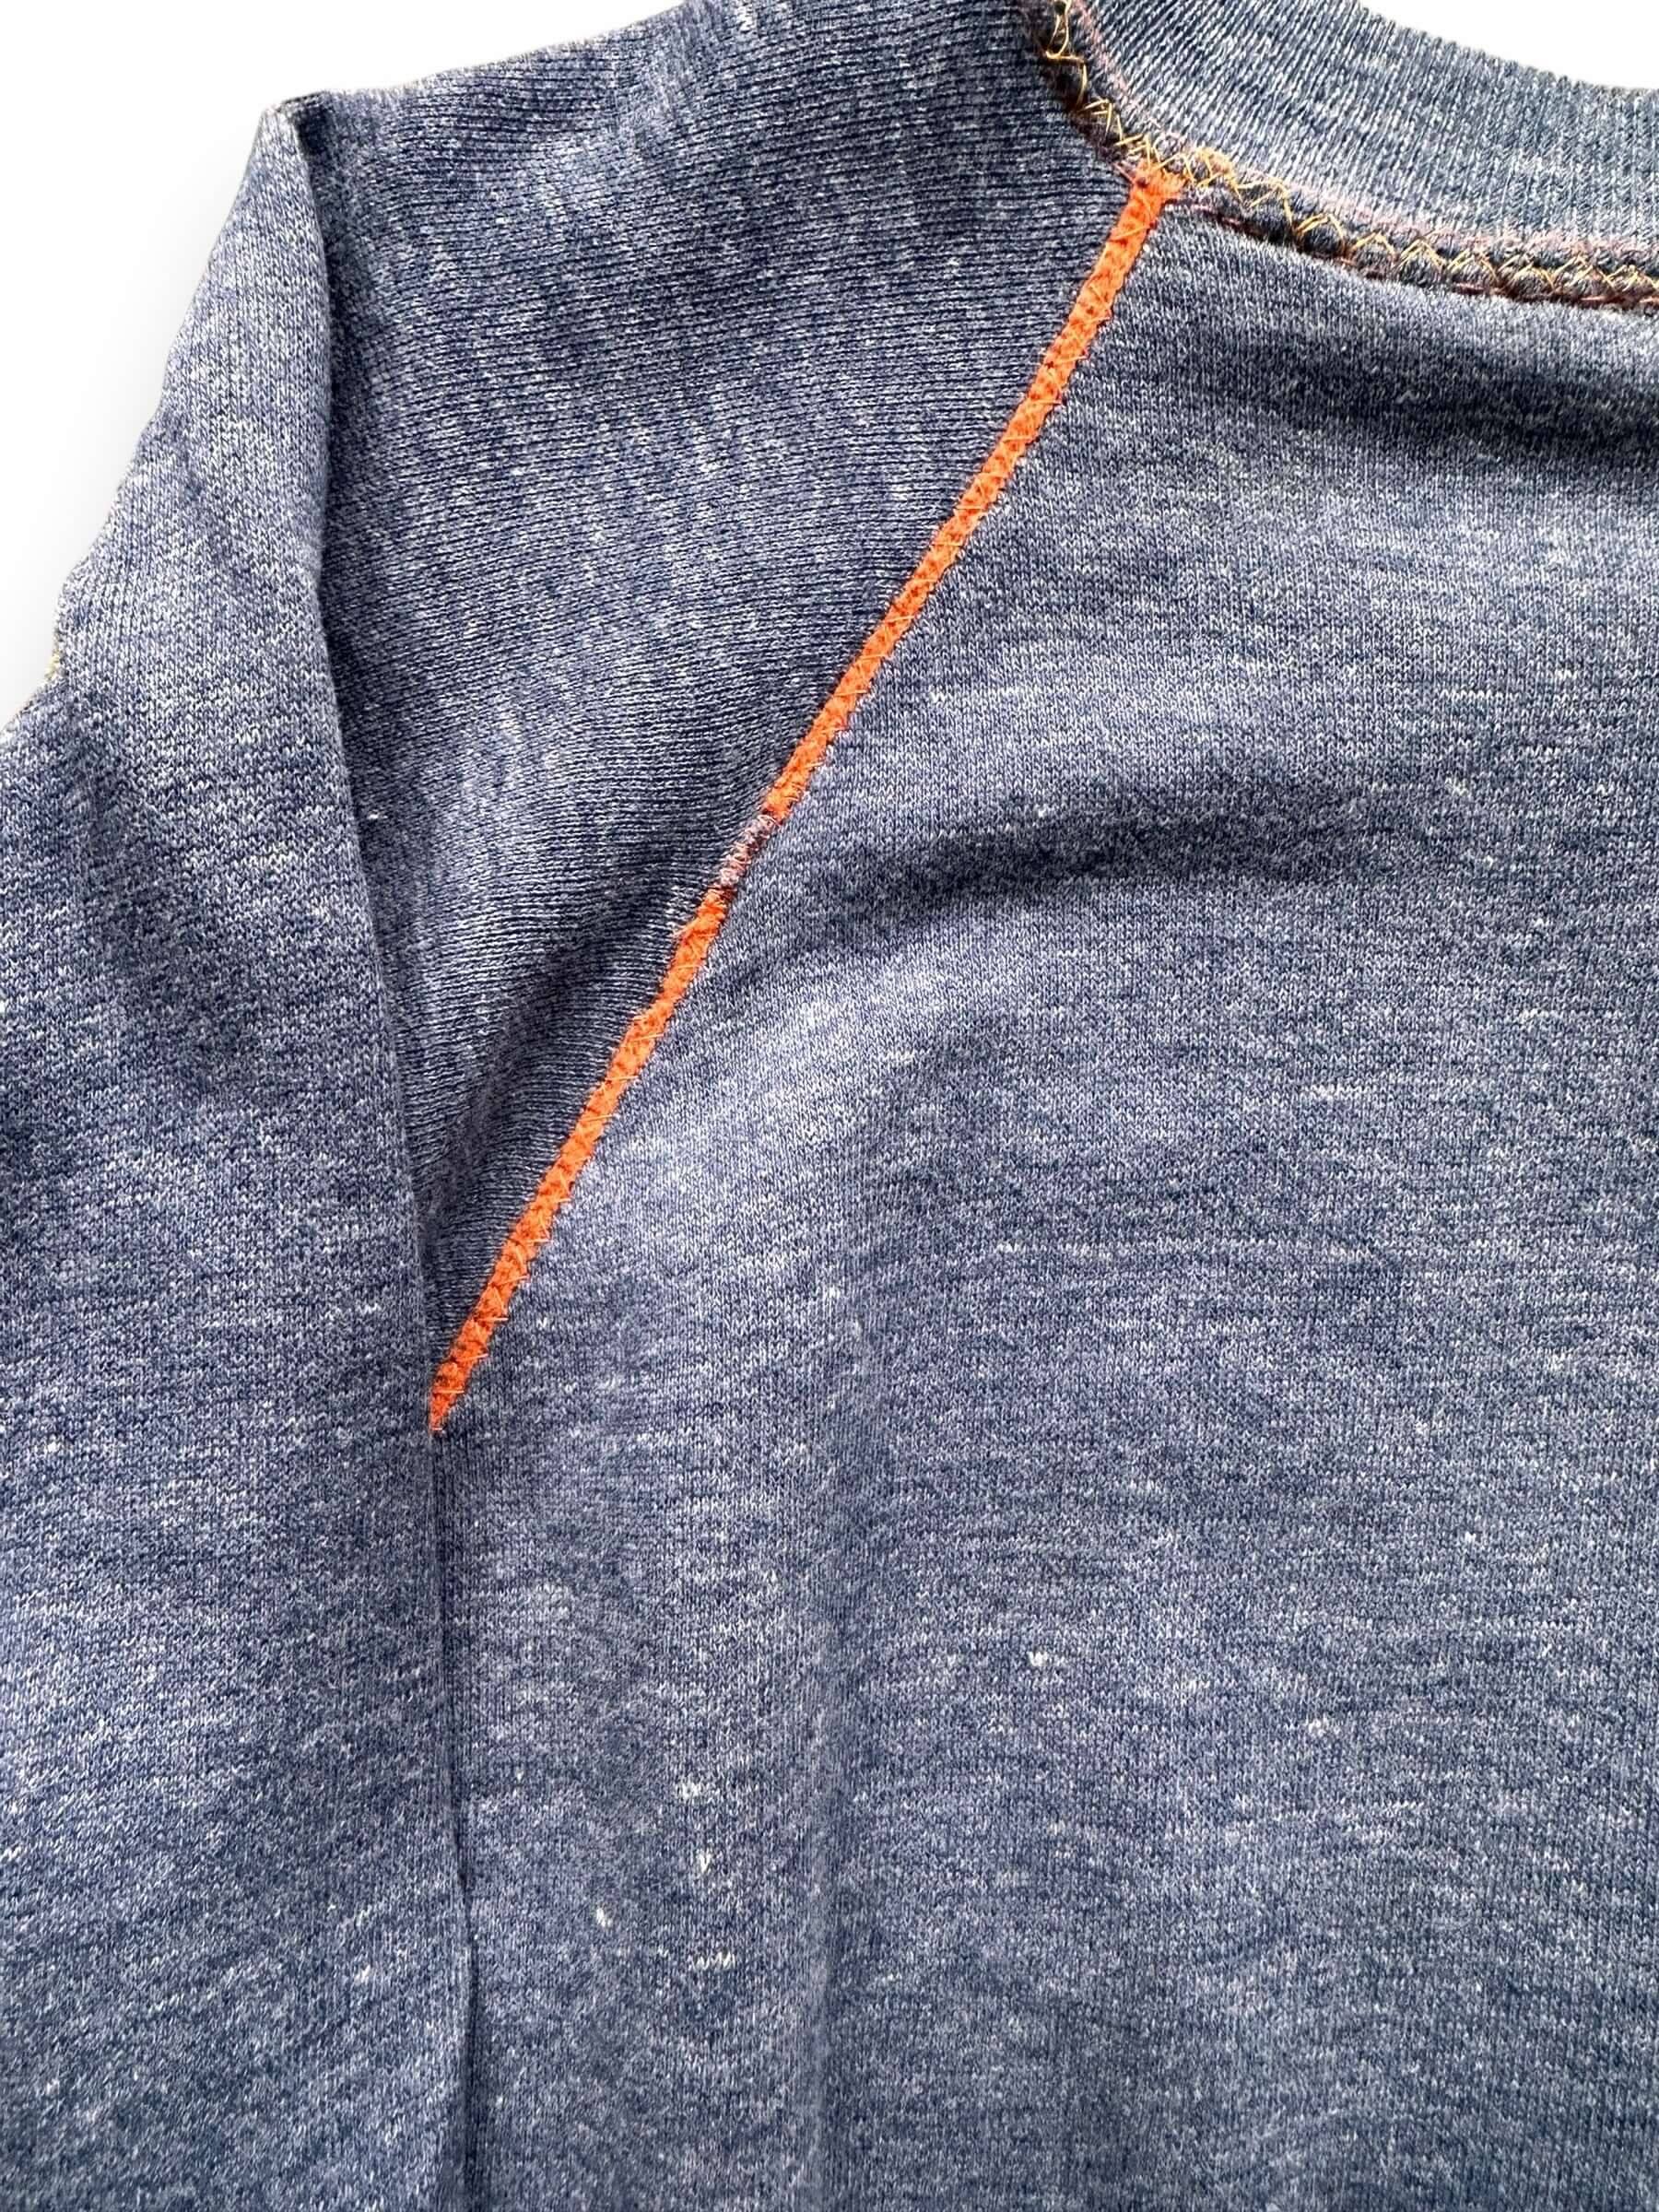 Dropped Stitches on Seam of Vintage Blue & Orange Contrast Stitch Crewneck SZ M | Vintage Sweatshirt Seattle